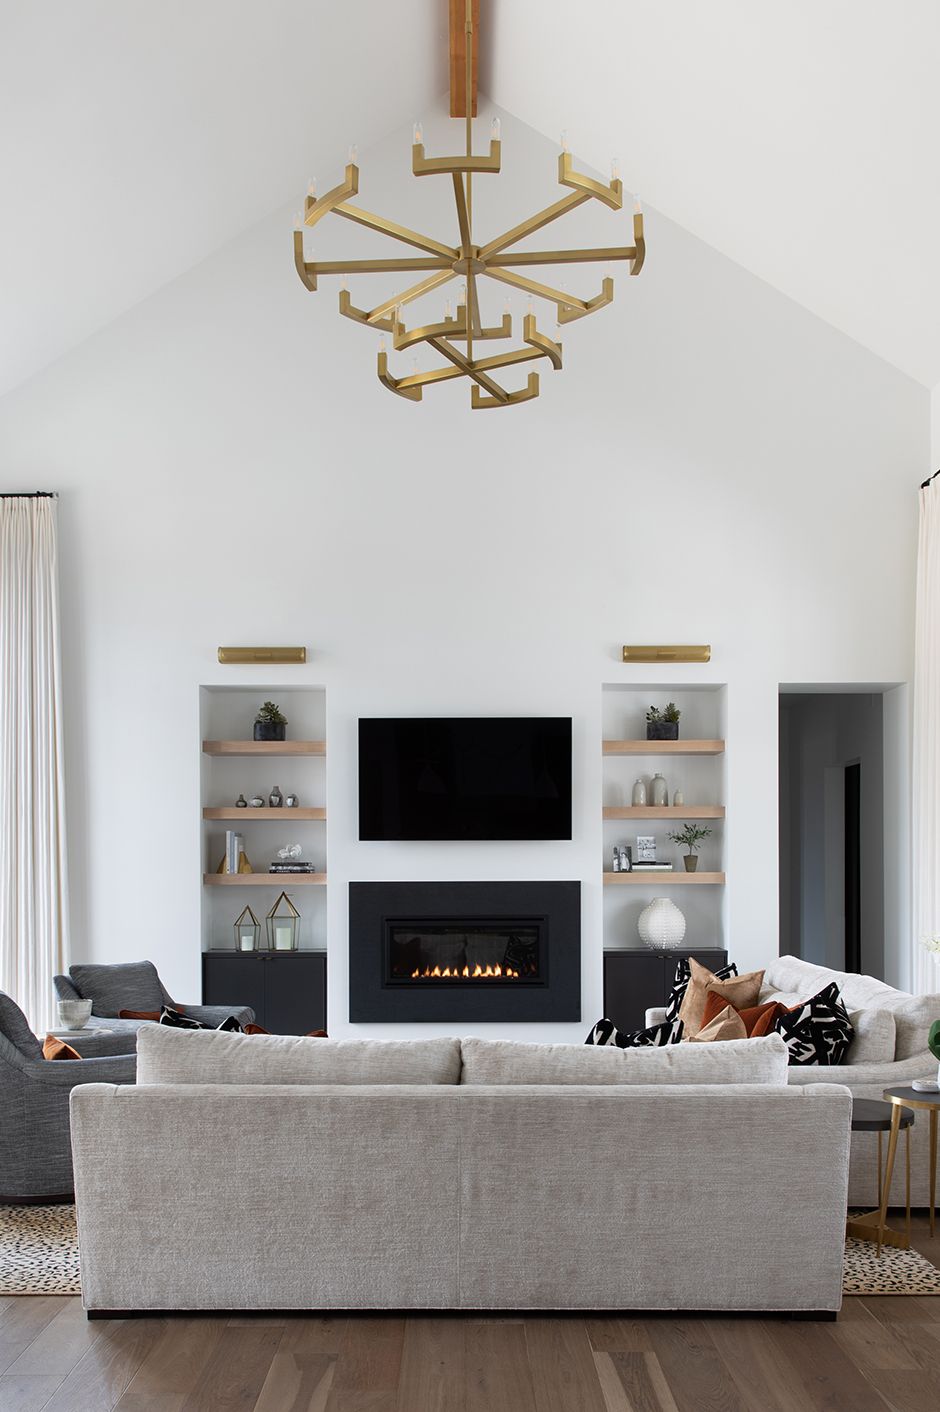 Pin on Living Room Furniture & Decor Ideas